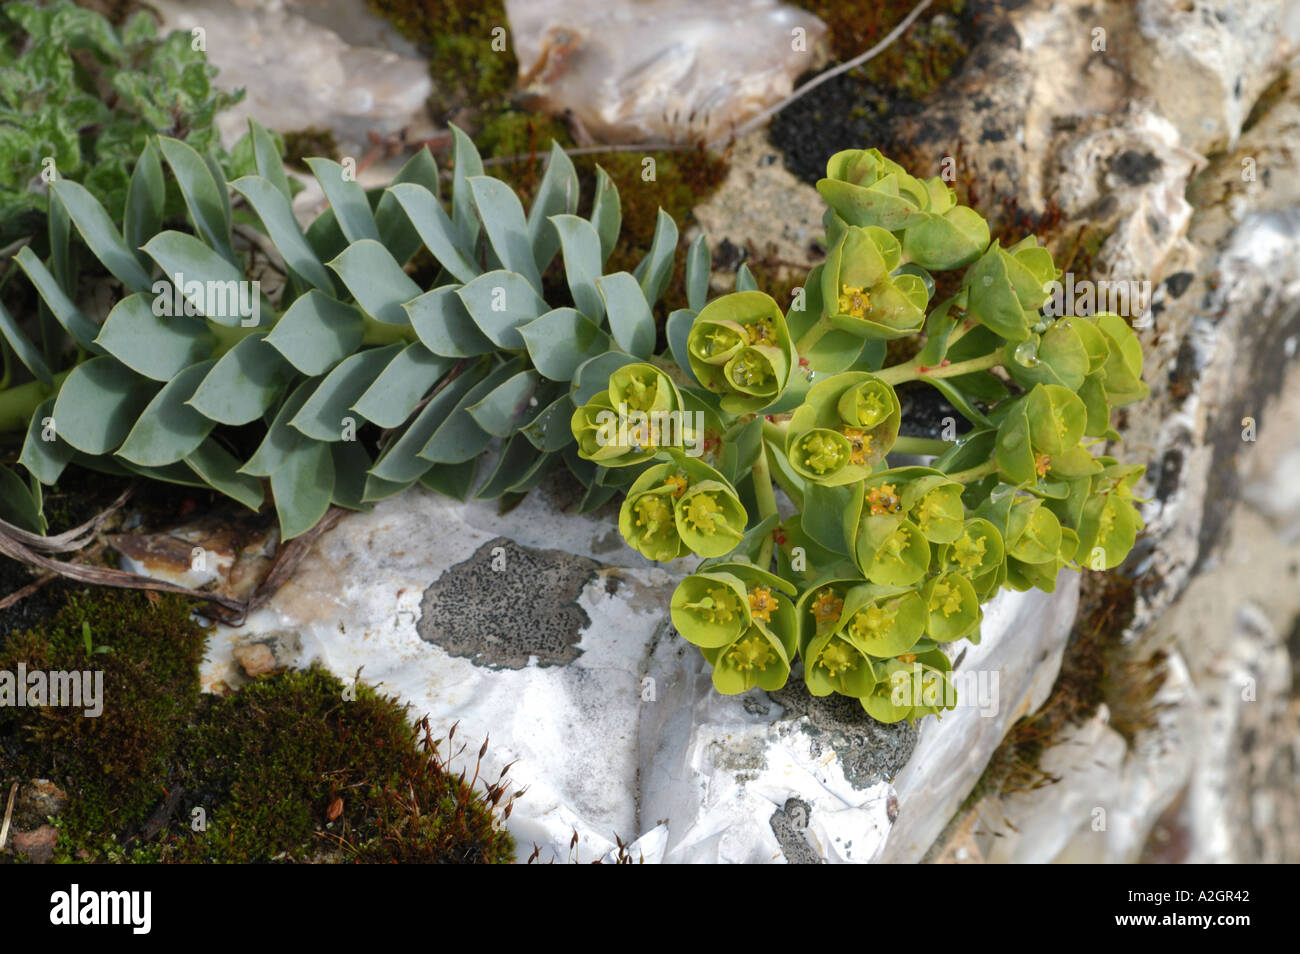 A rockery plant Euphorbia myrsinites in flower against a flint stone with lichens Stock Photo